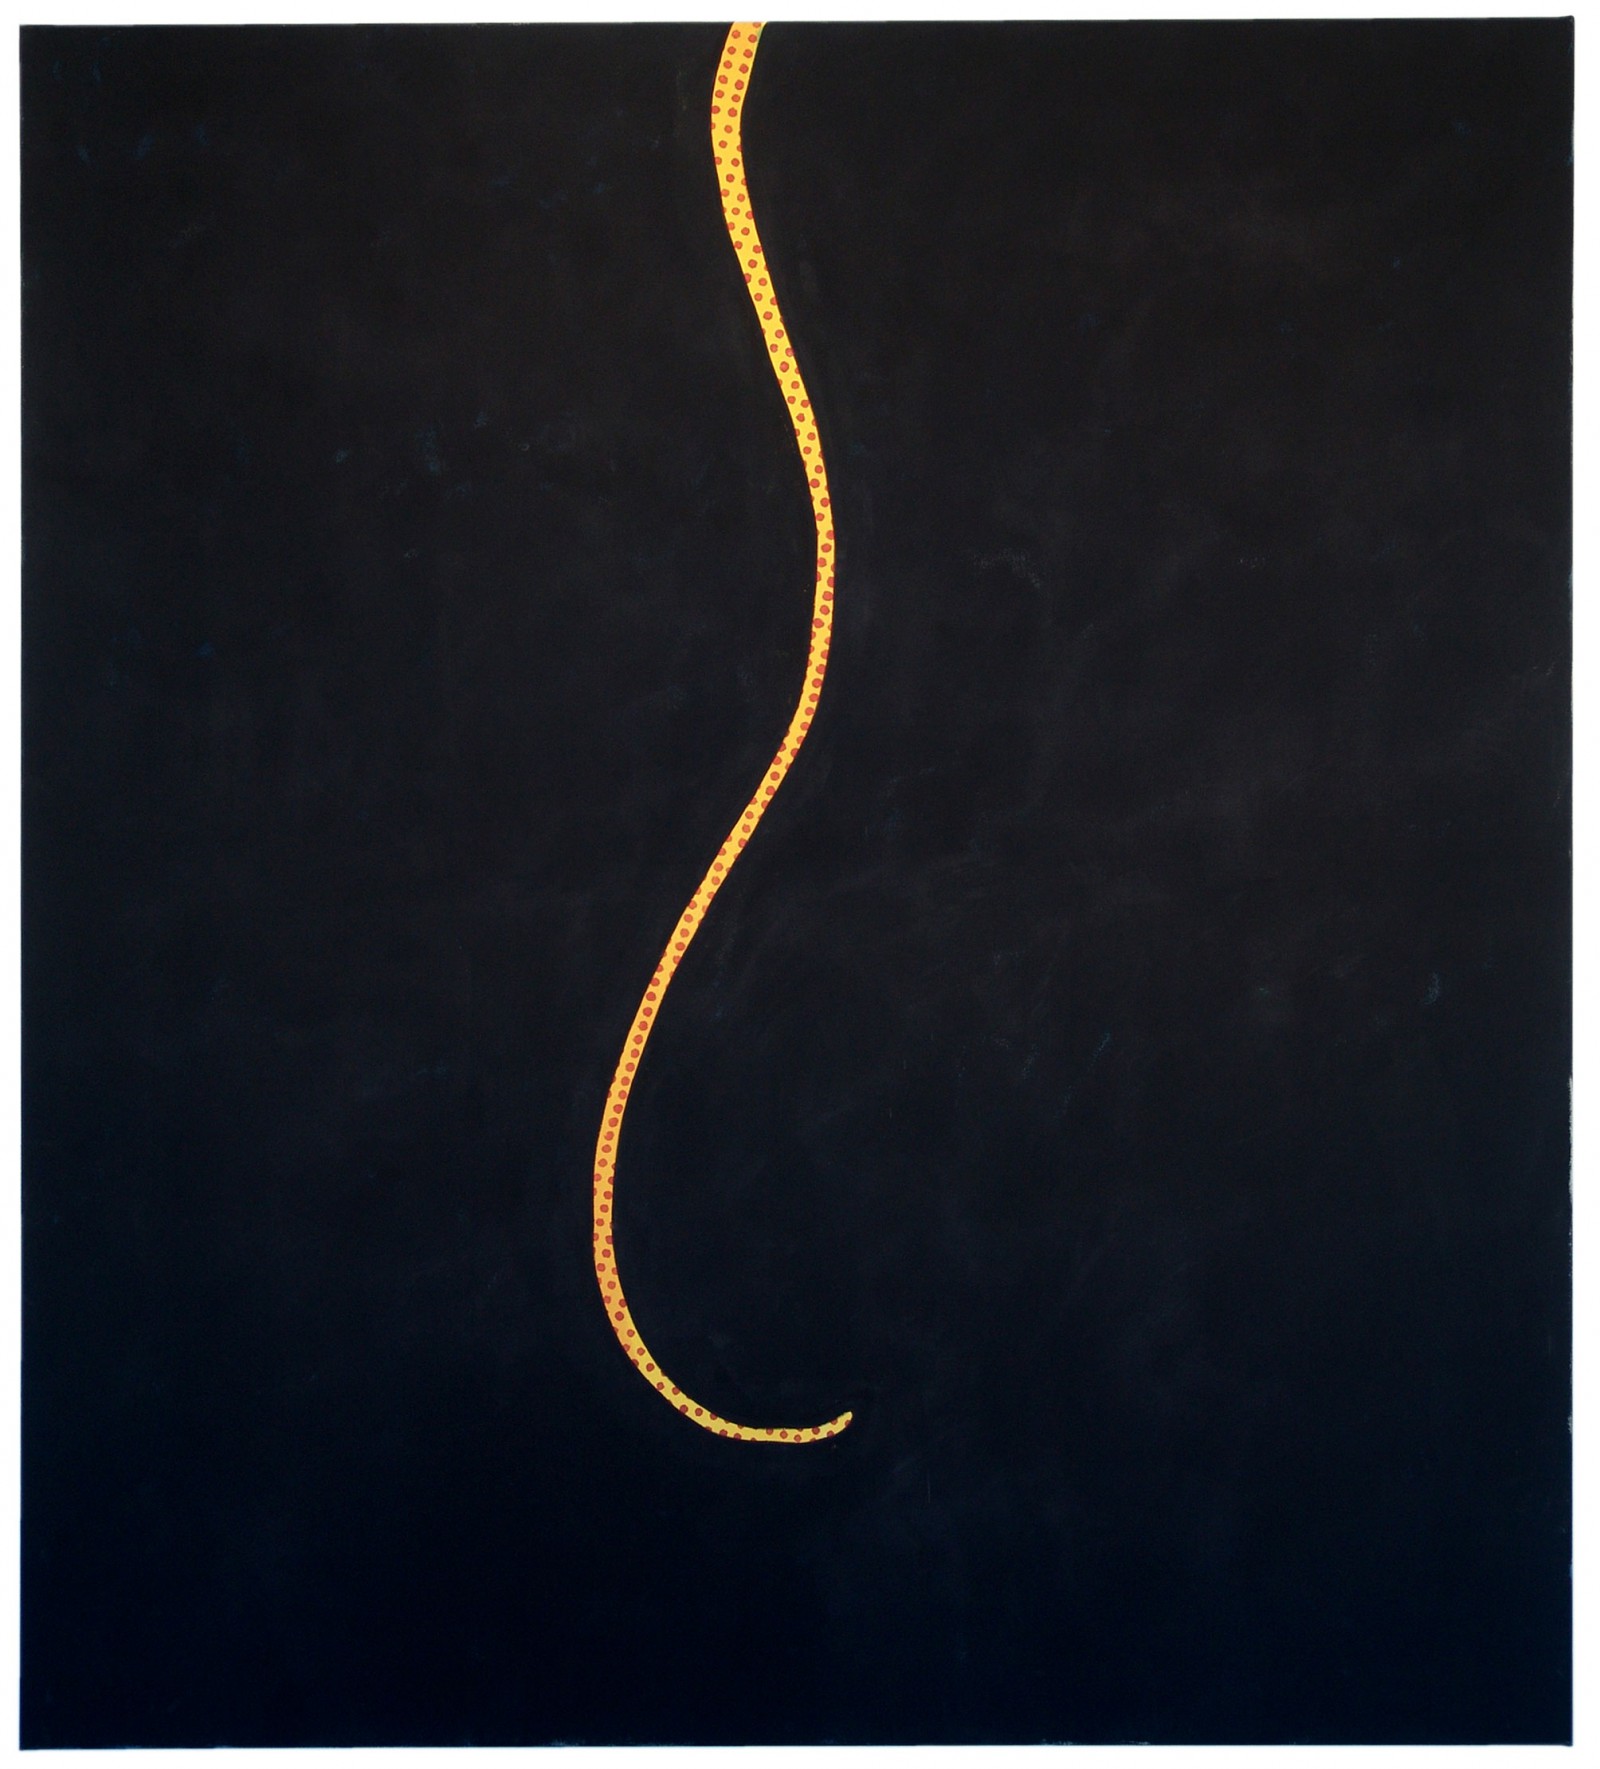 Kim Nekarda: it's something to grasp, 2005, vinyl color on cotton, 180 x 160 cm